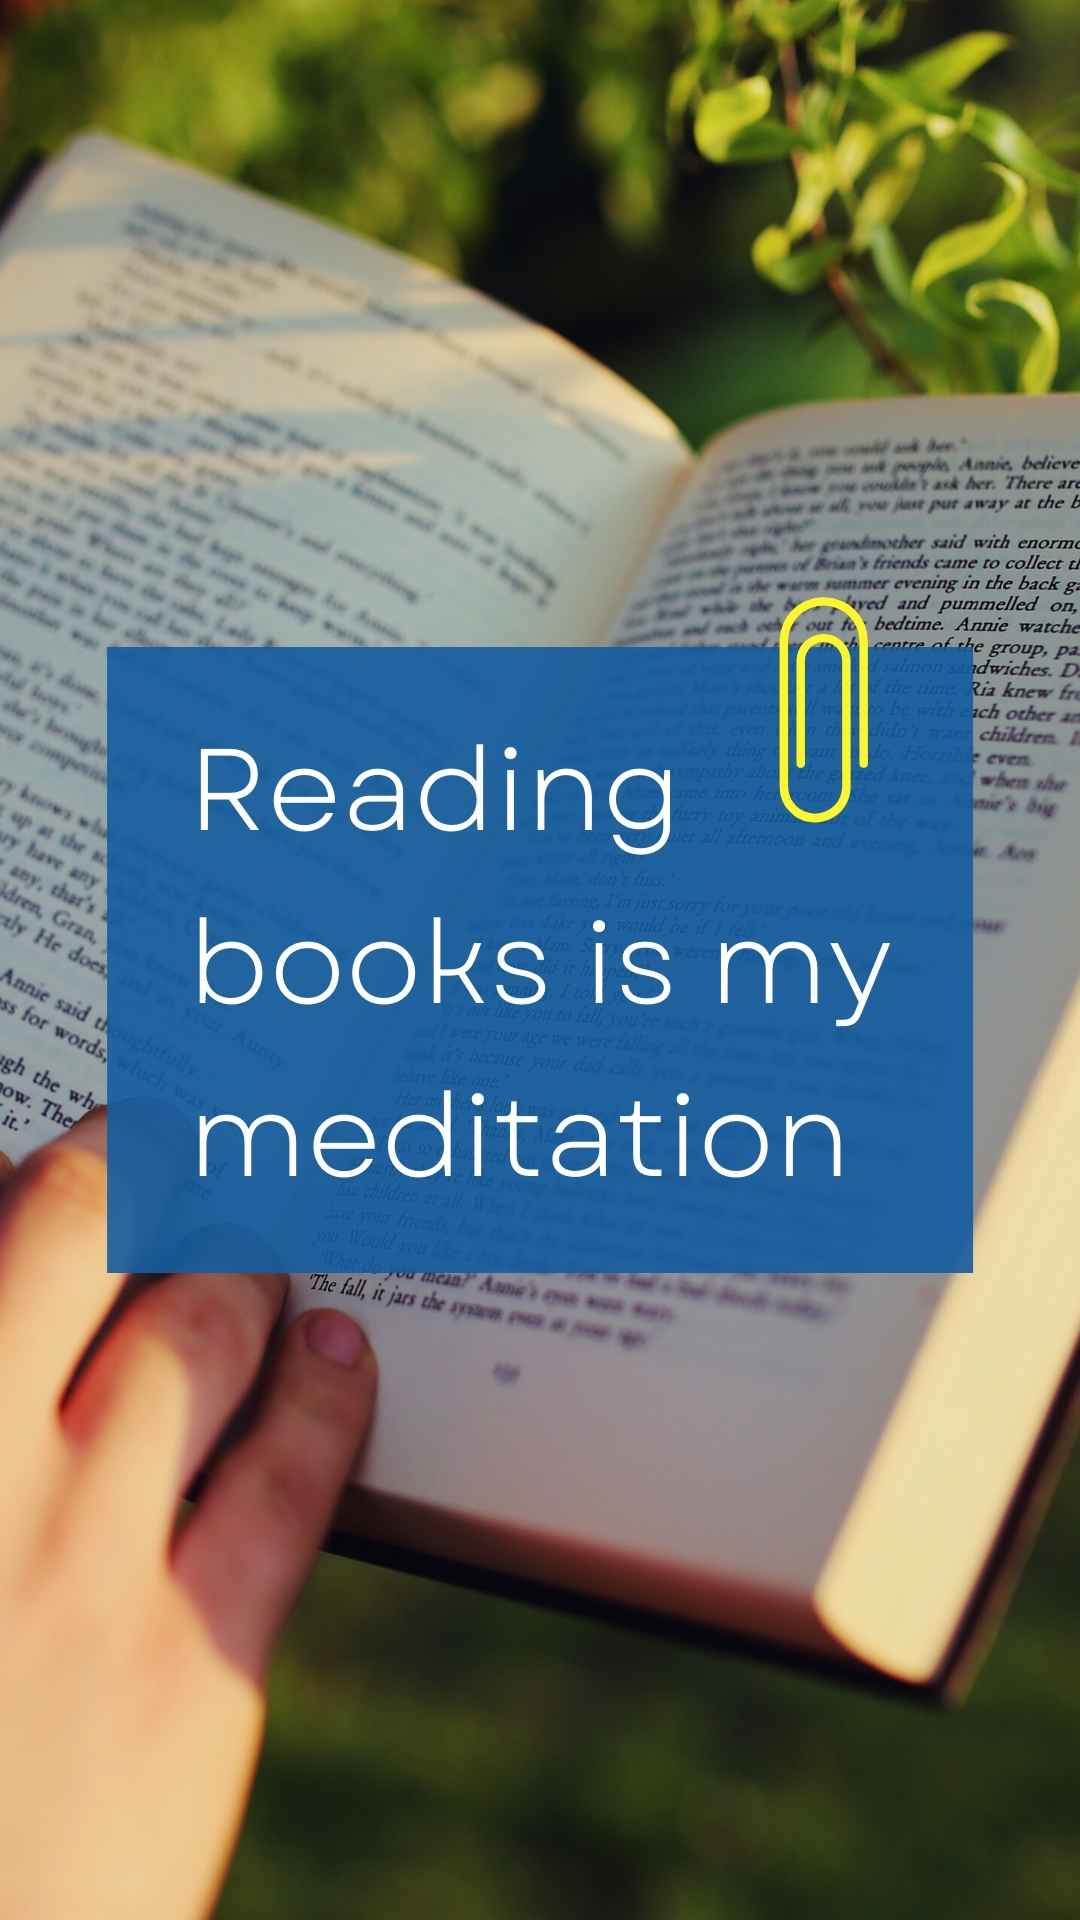 Reading books is my meditation